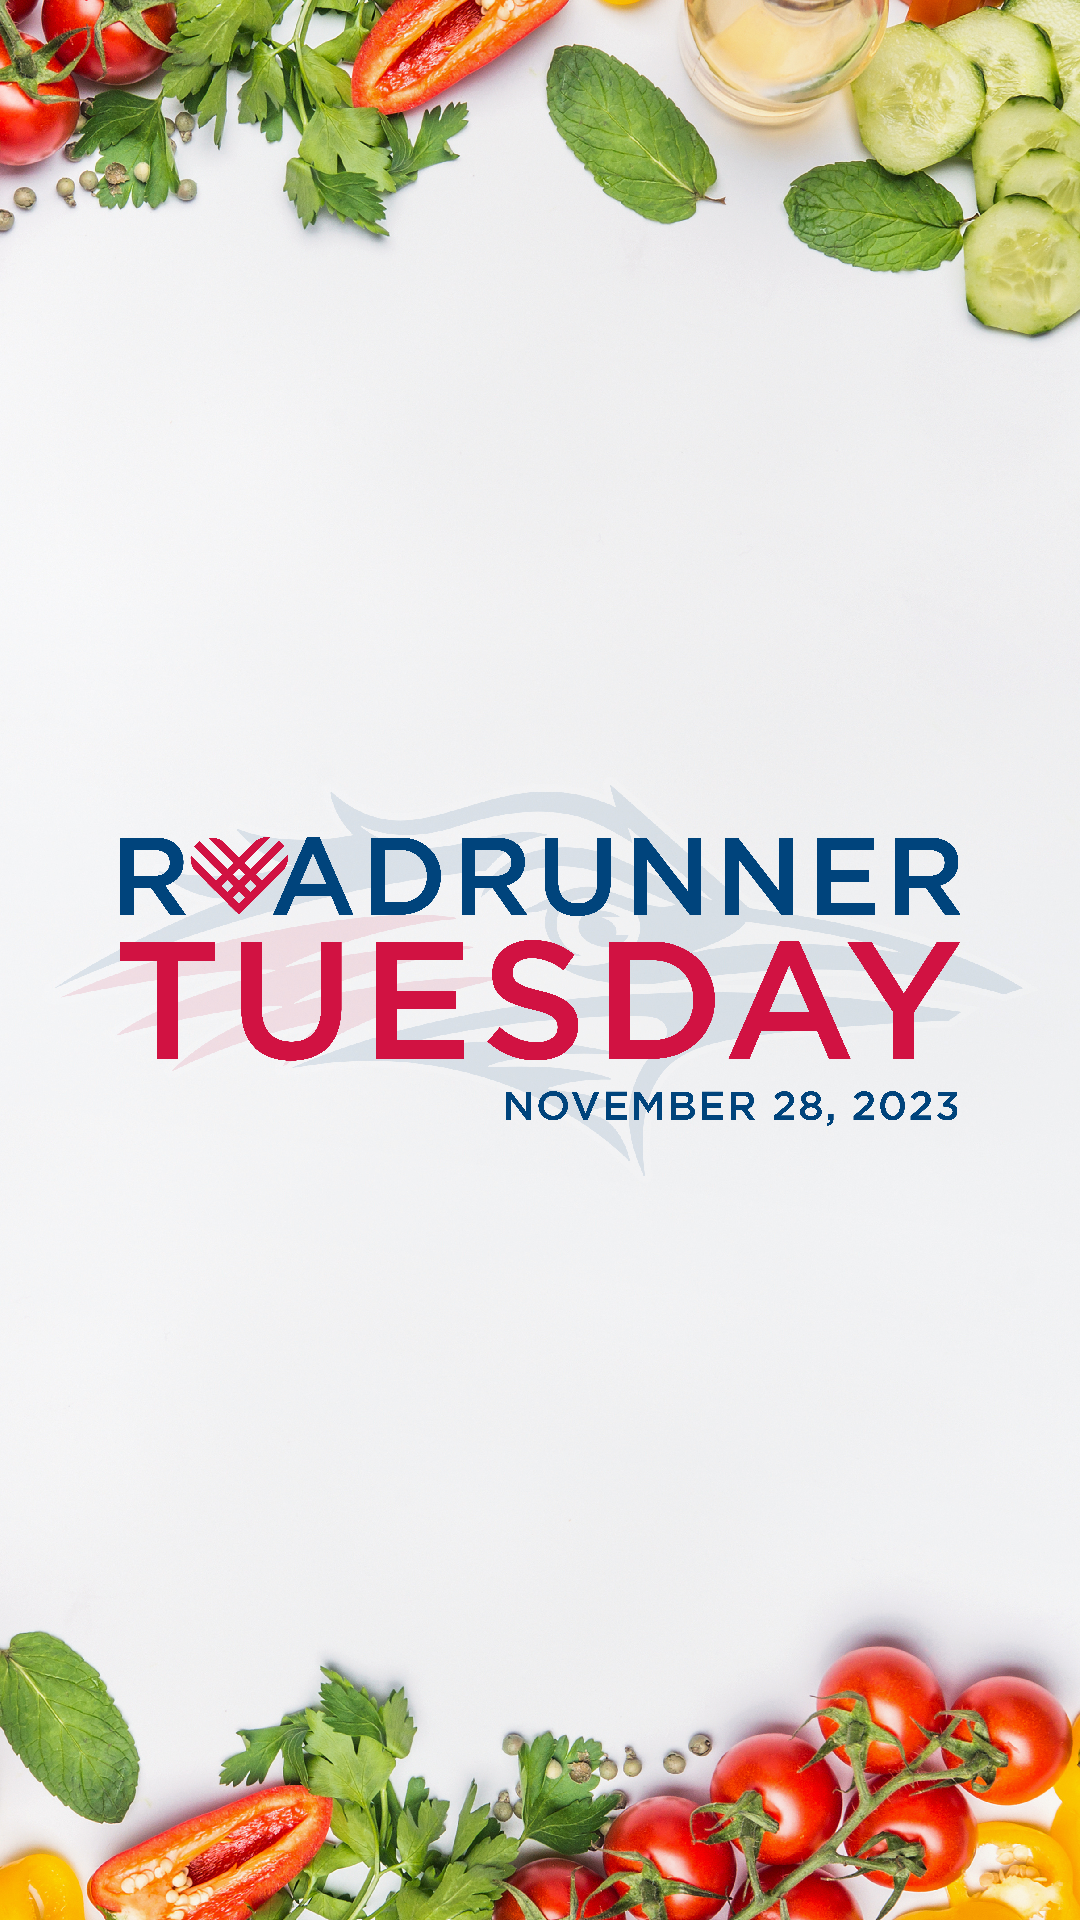 Roadrunner Tuesday graphic